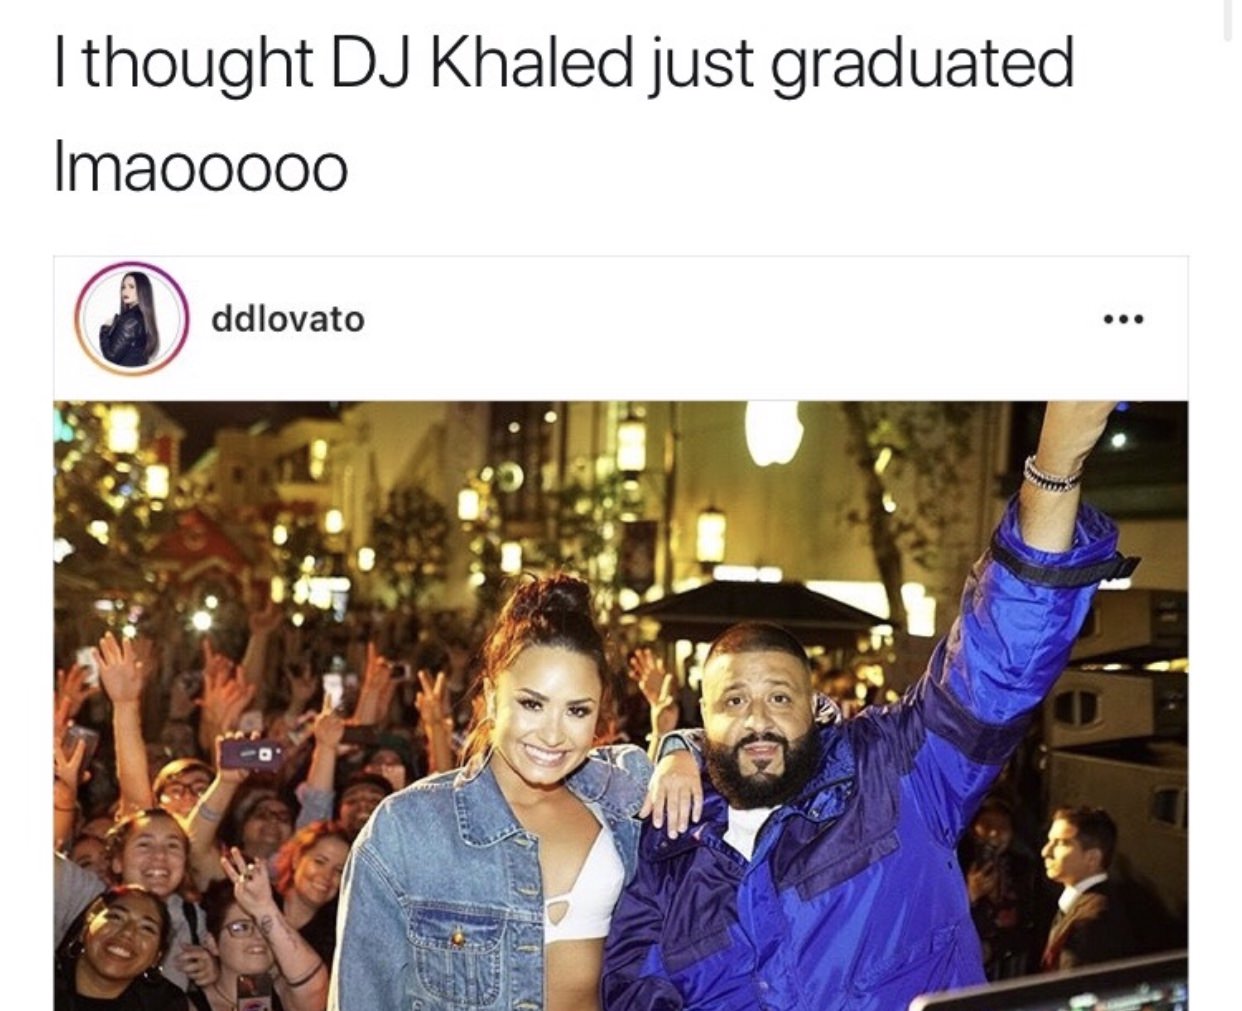 into the wild poster - I thought Dj Khaled just graduated Imaooooo ddlovato